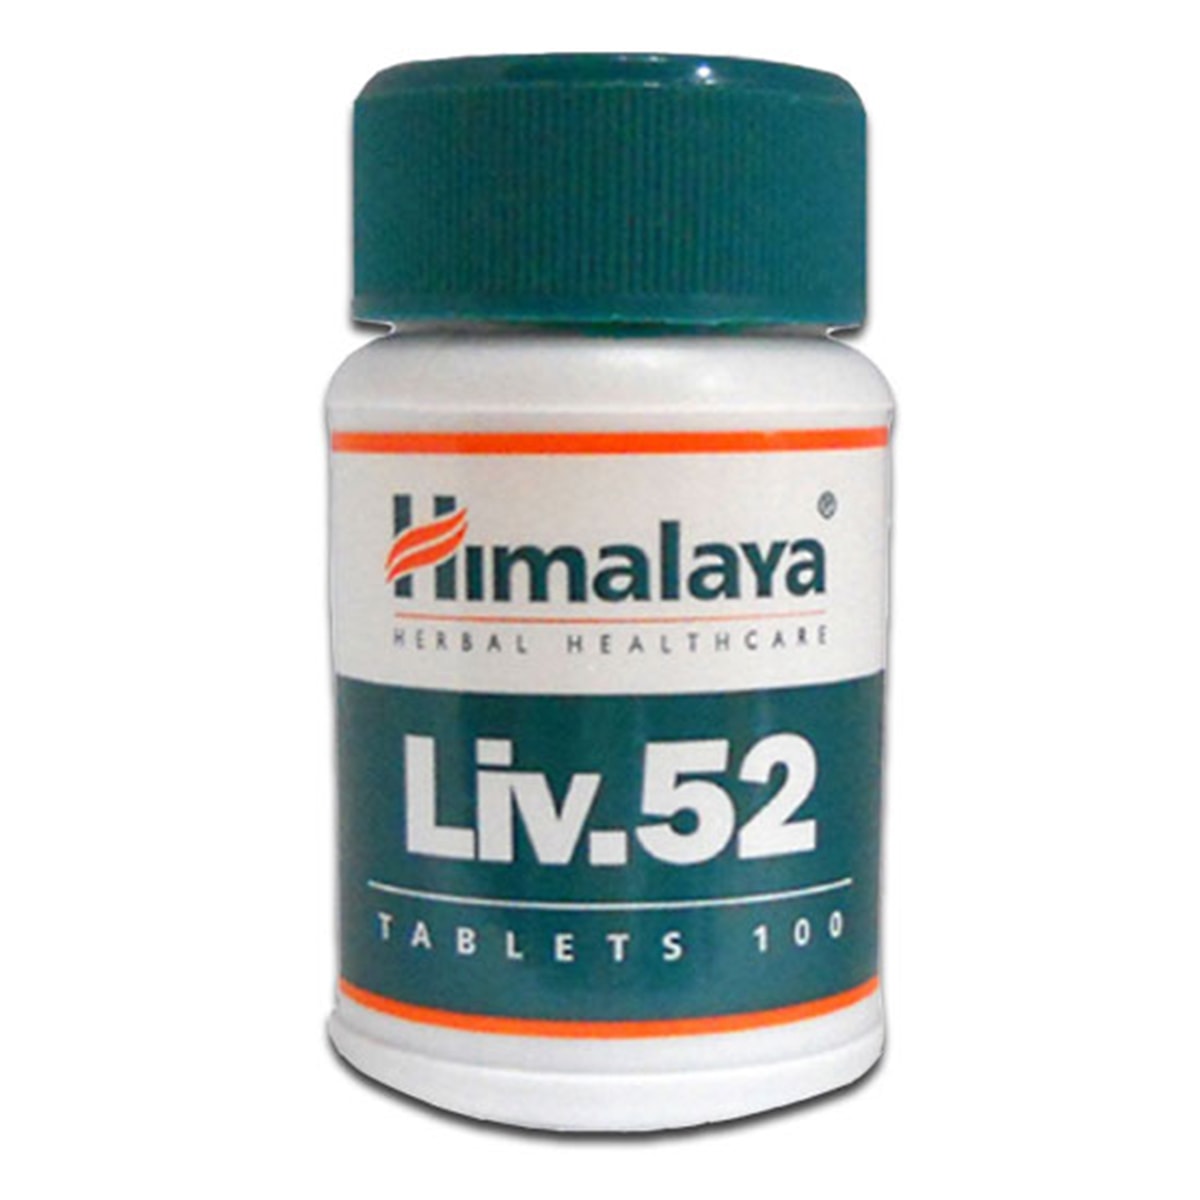 Buy Himalaya Herbals Liv 52 - 100 Tablets